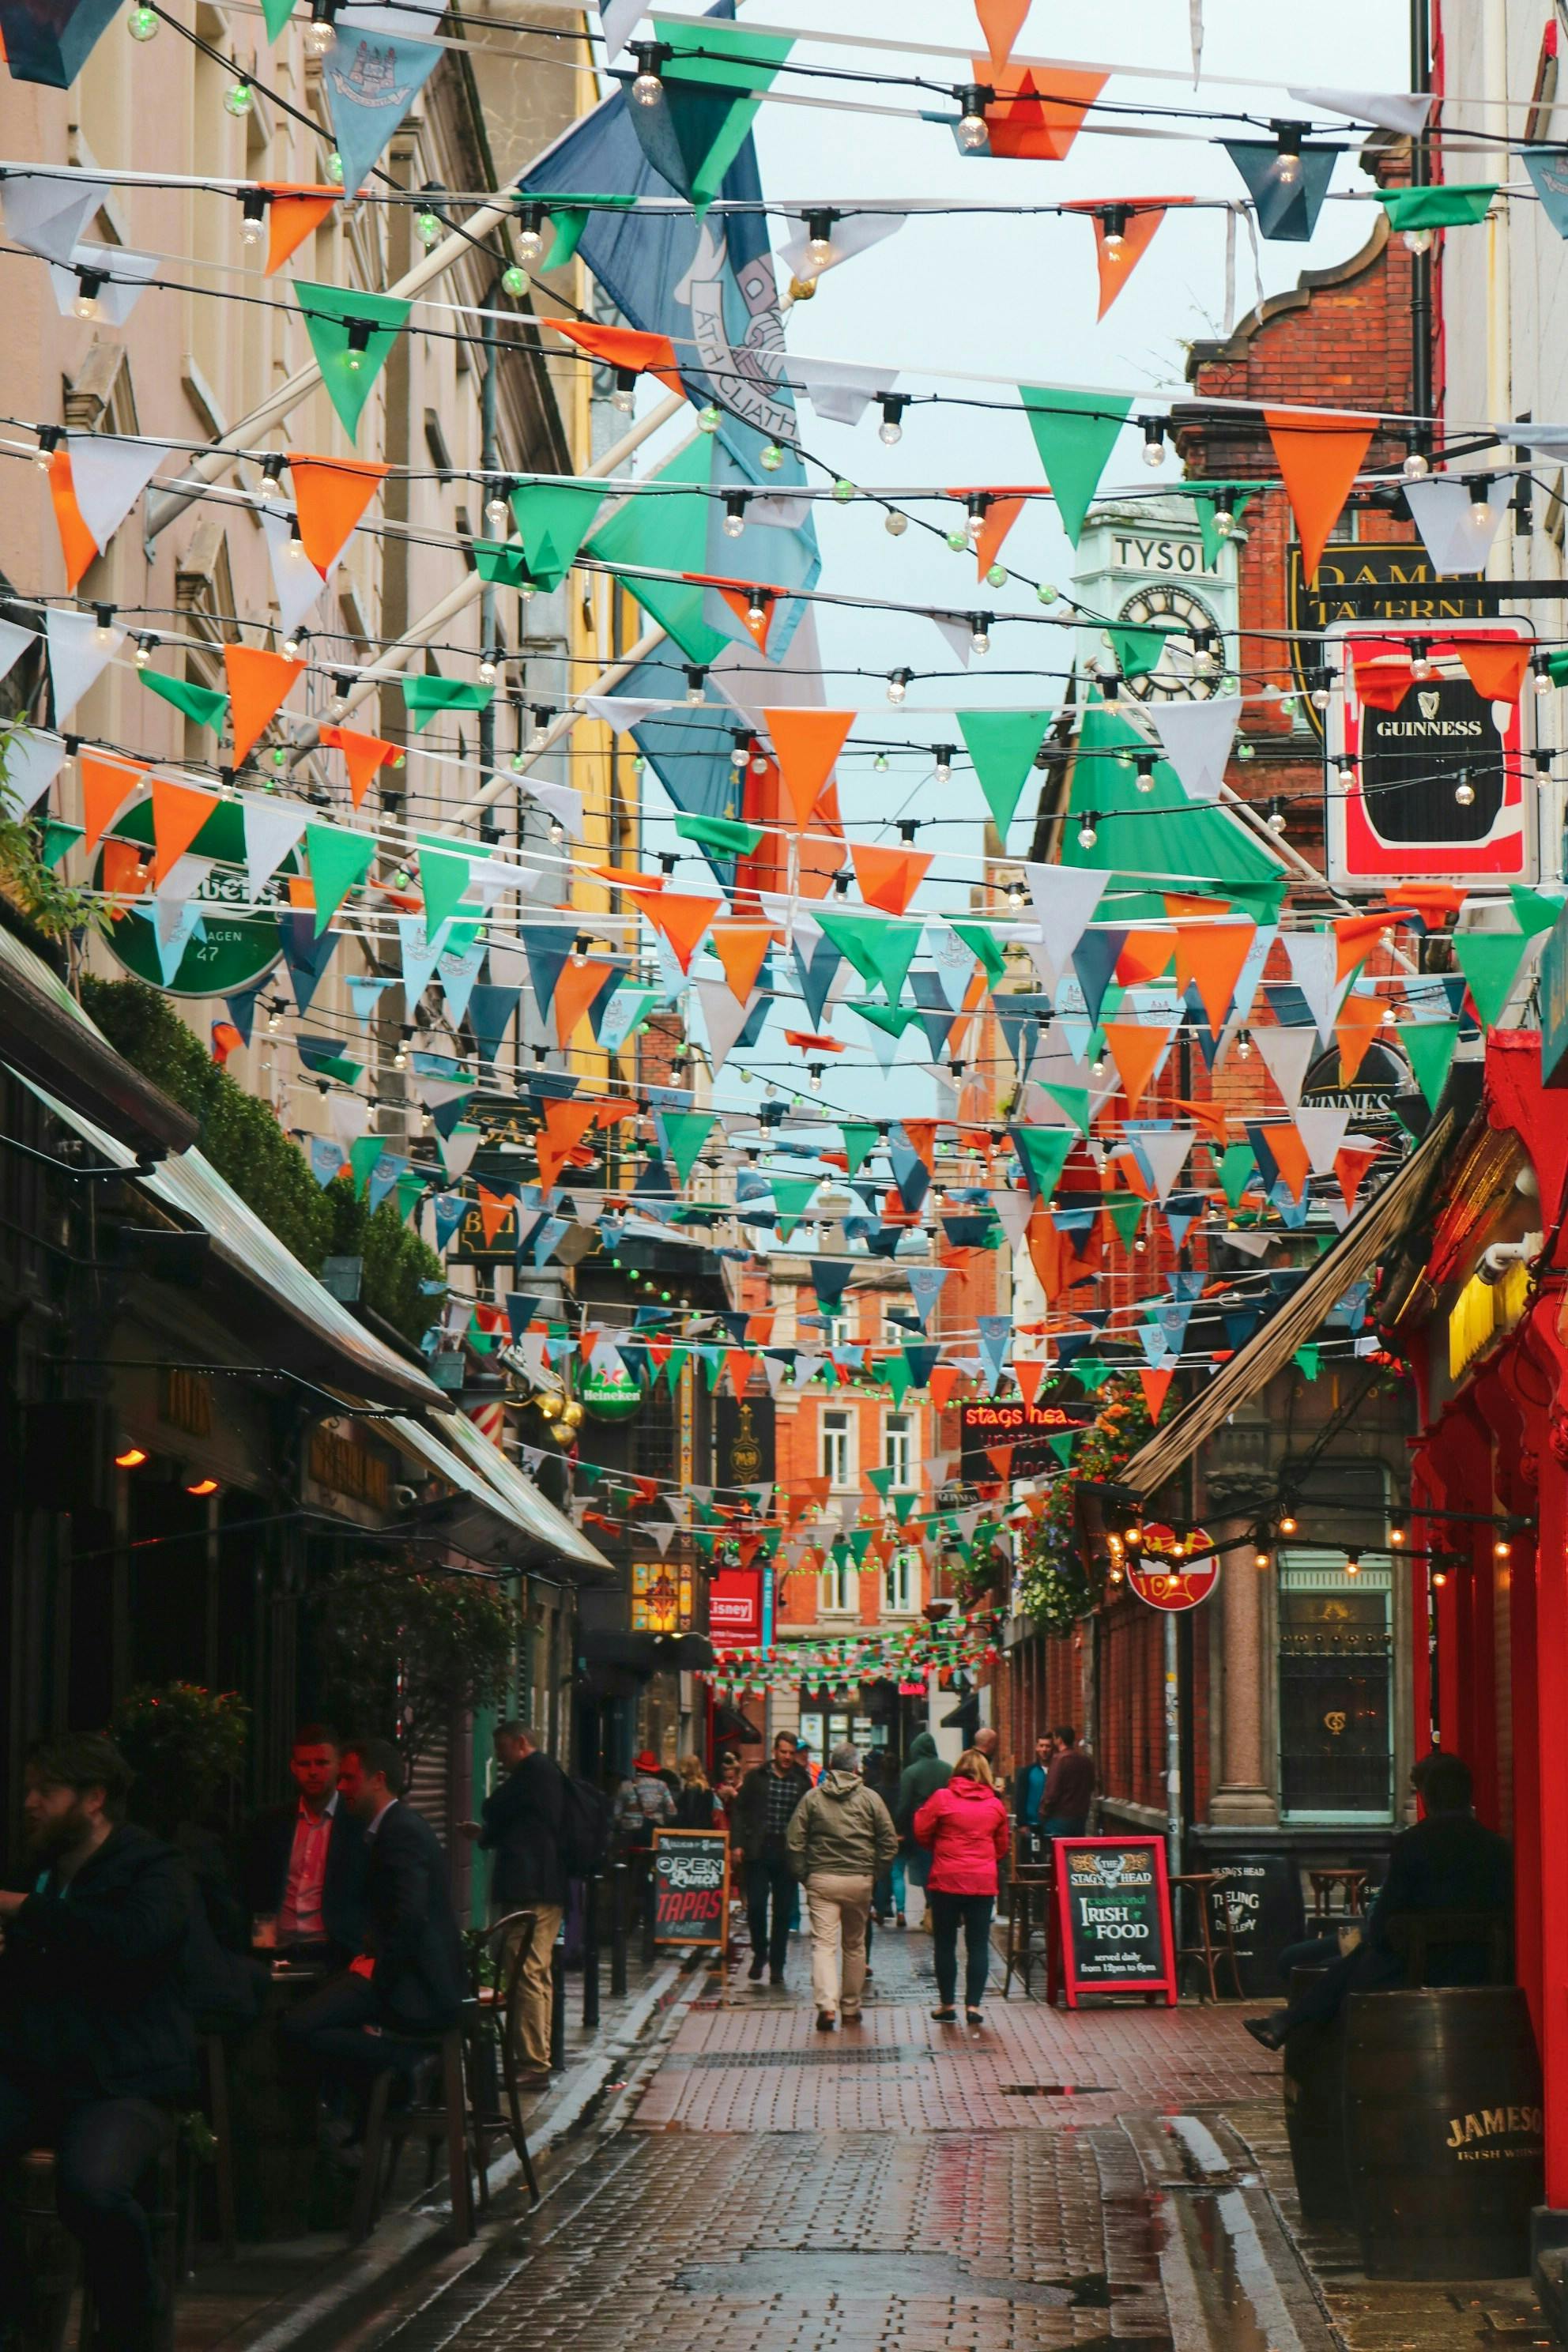 Temple Bar in Dublin. Photo from Anna Church on Unsplash